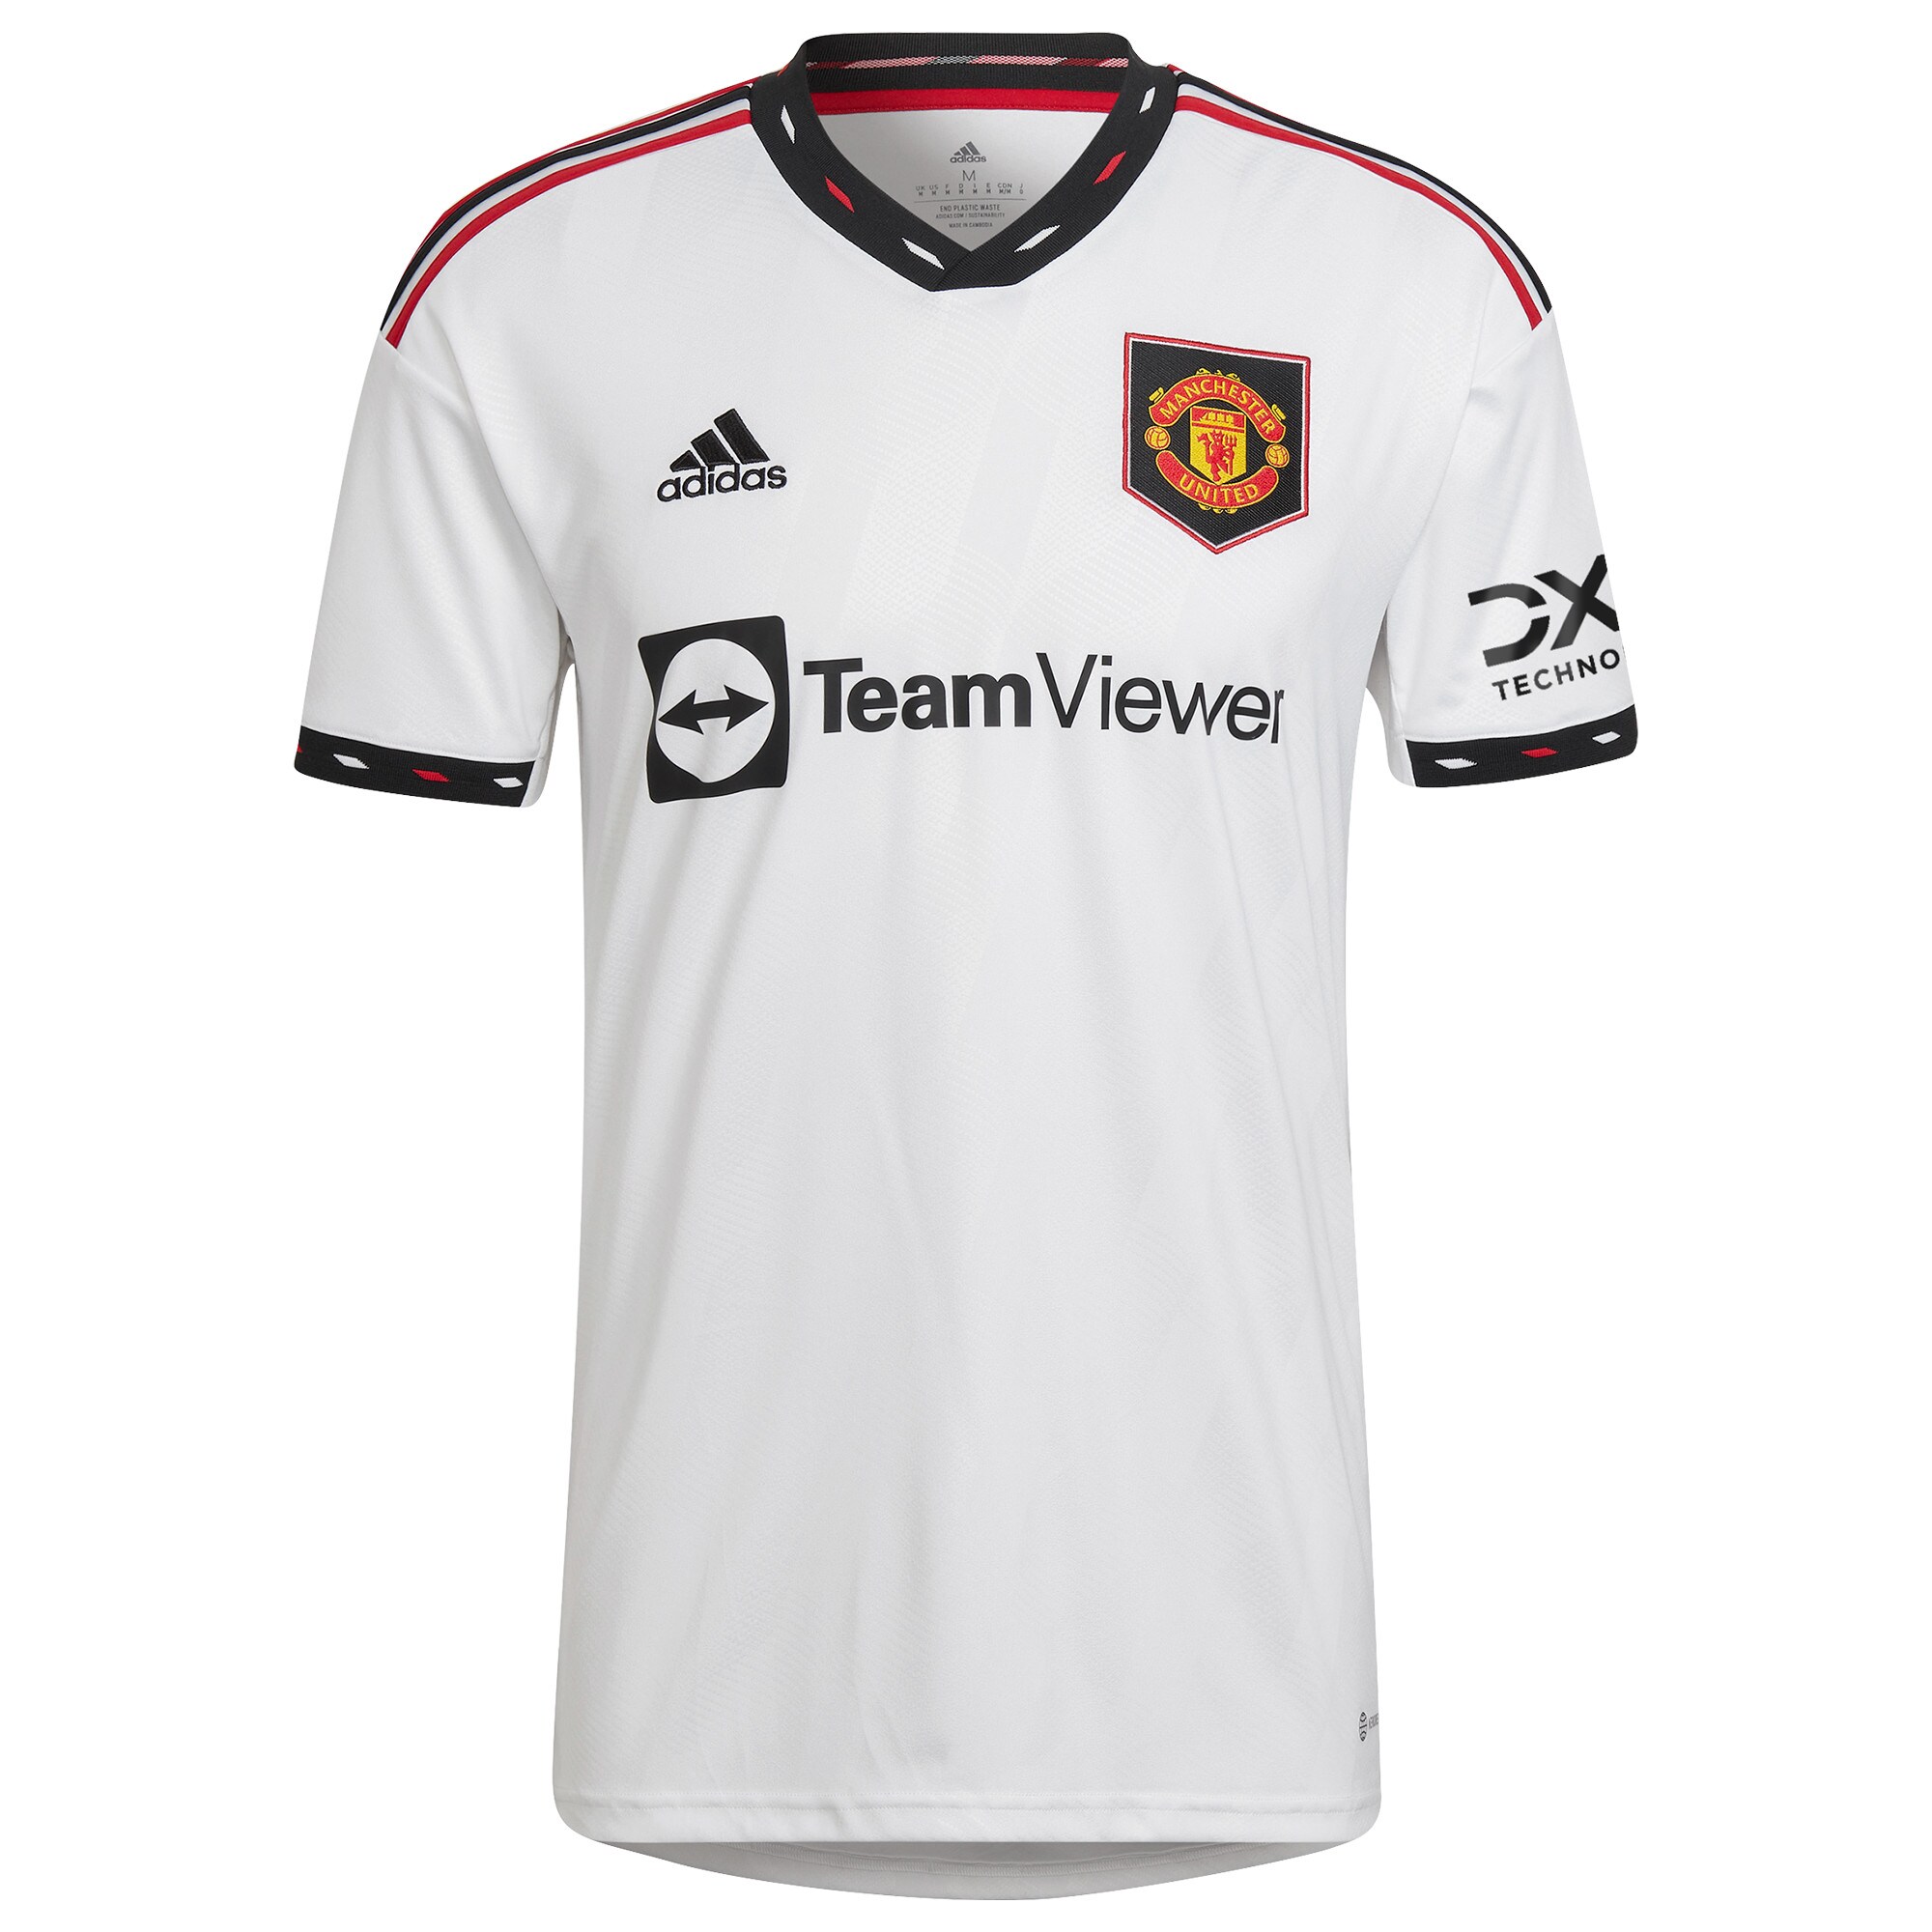 Manchester United Away Shirt 2022-23 with Jones 4 printing